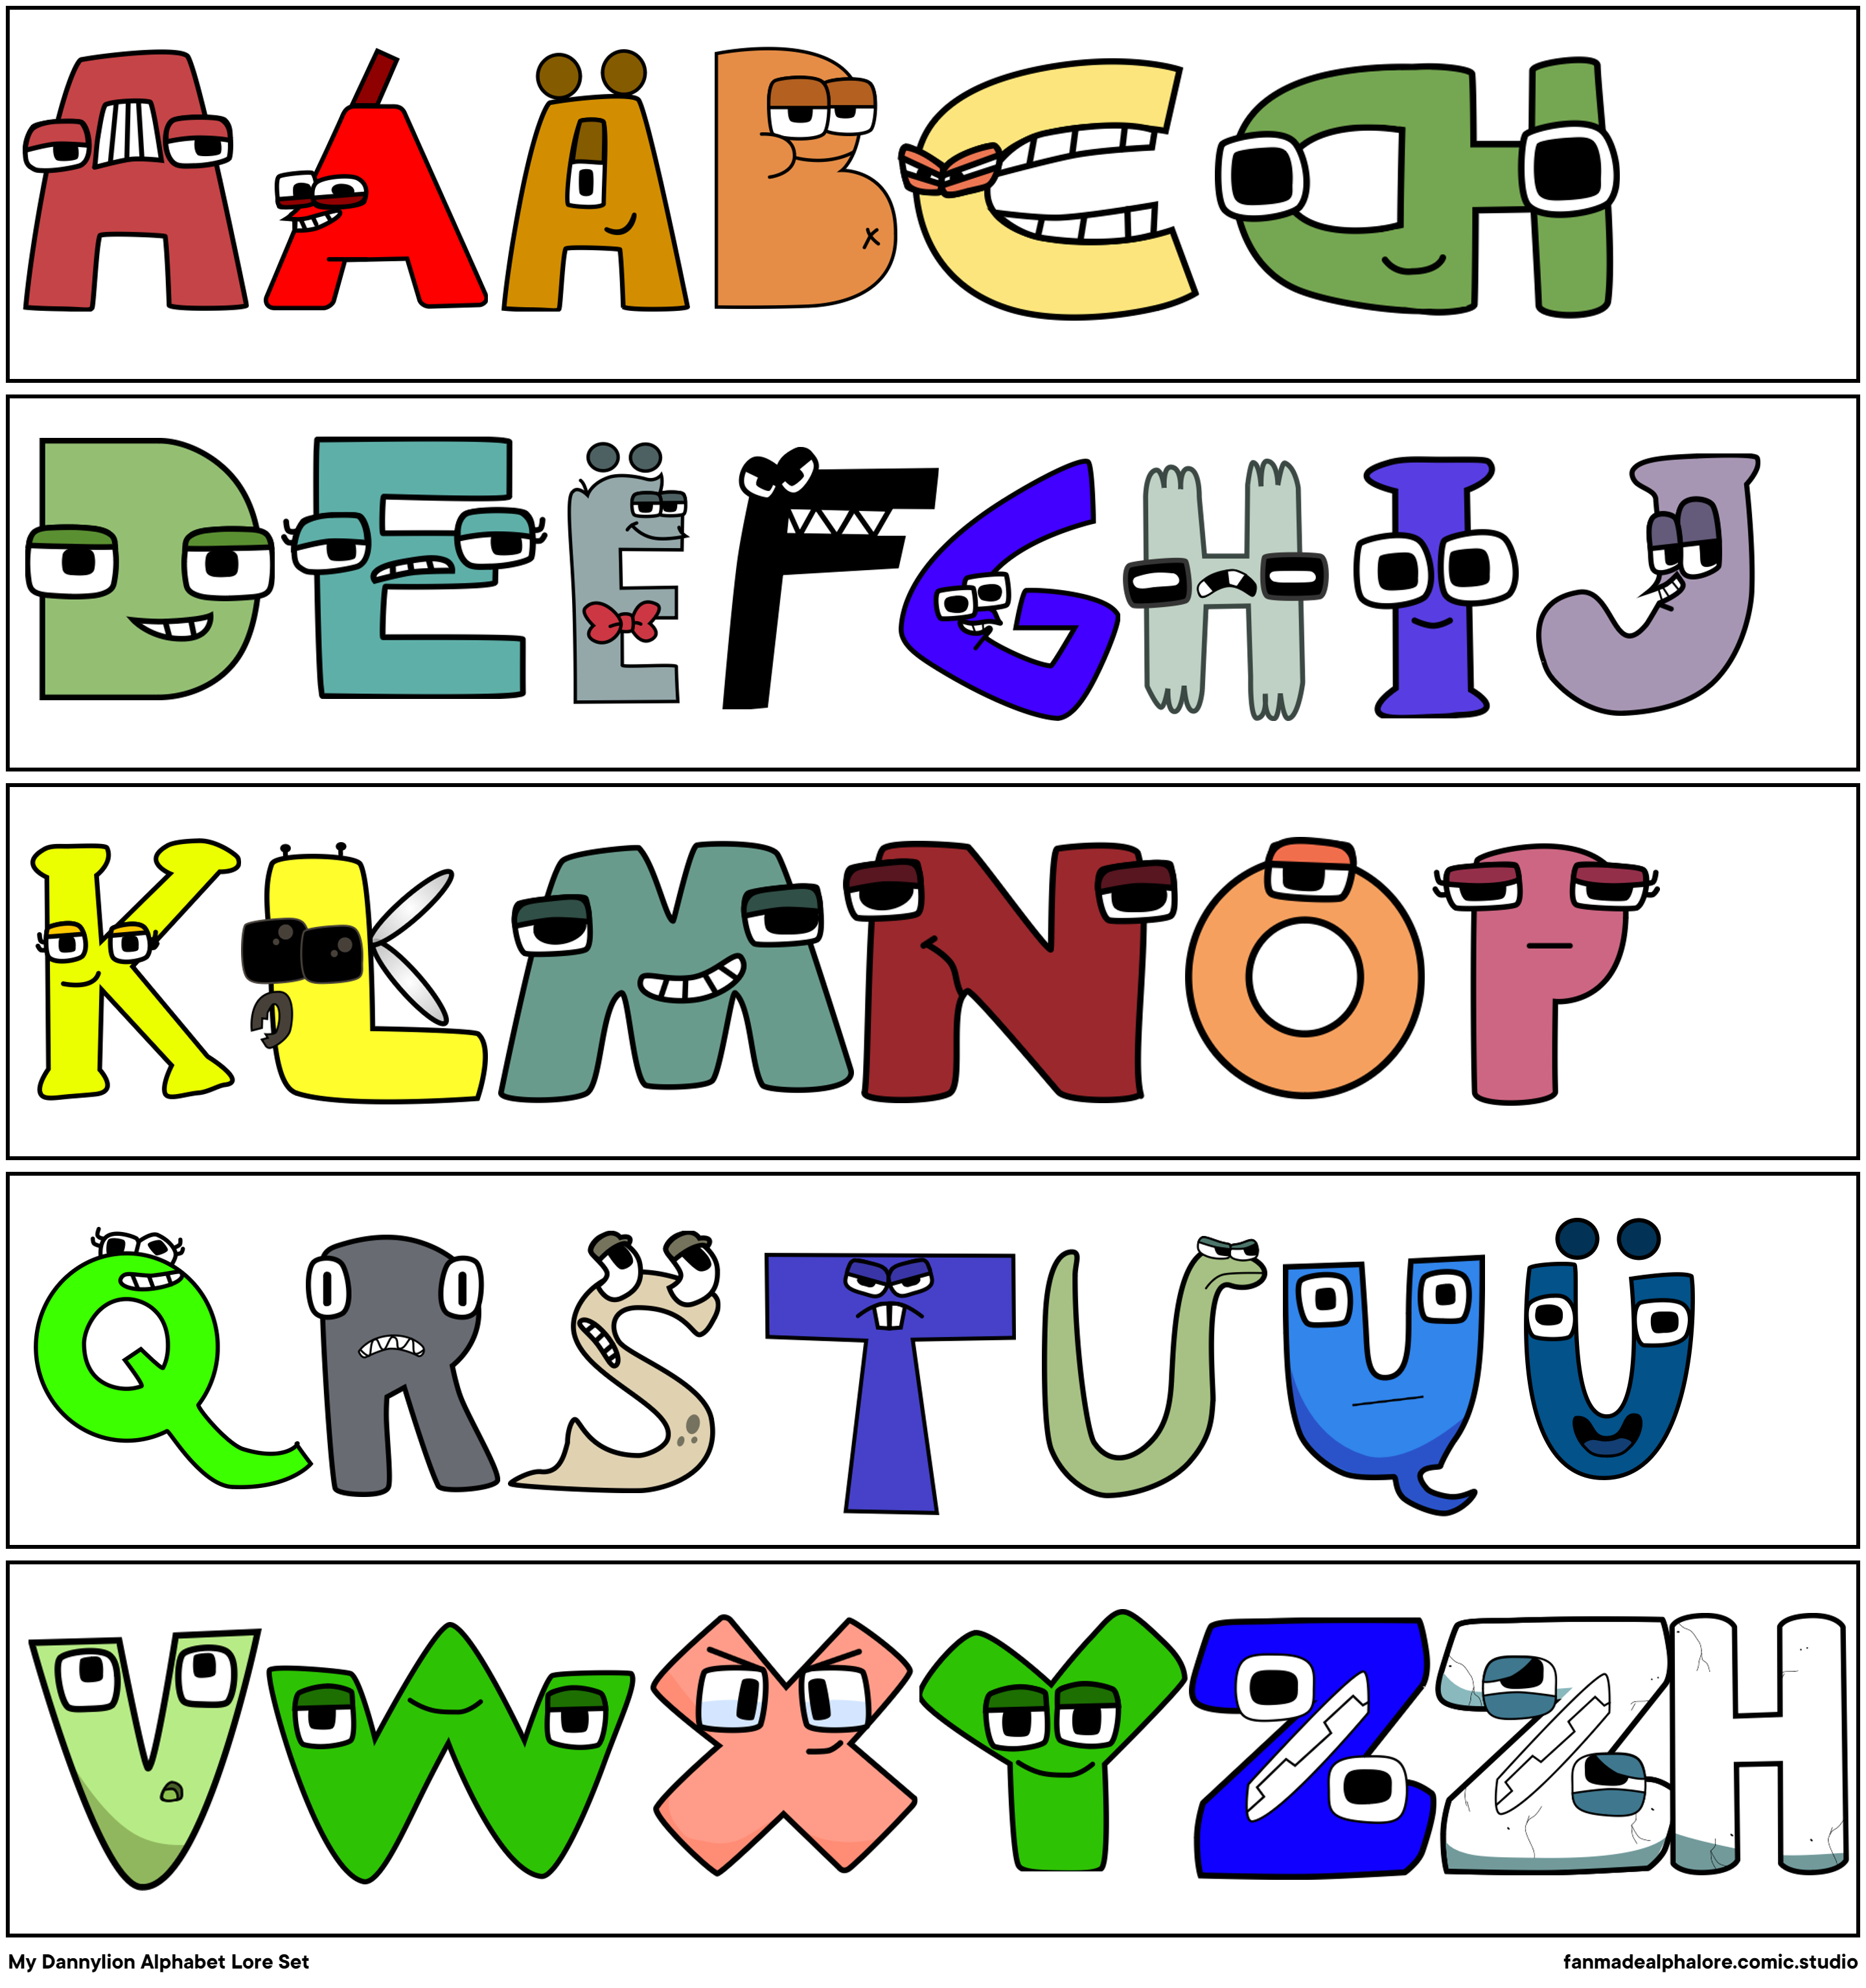 My Dannylion Alphabet Lore Set